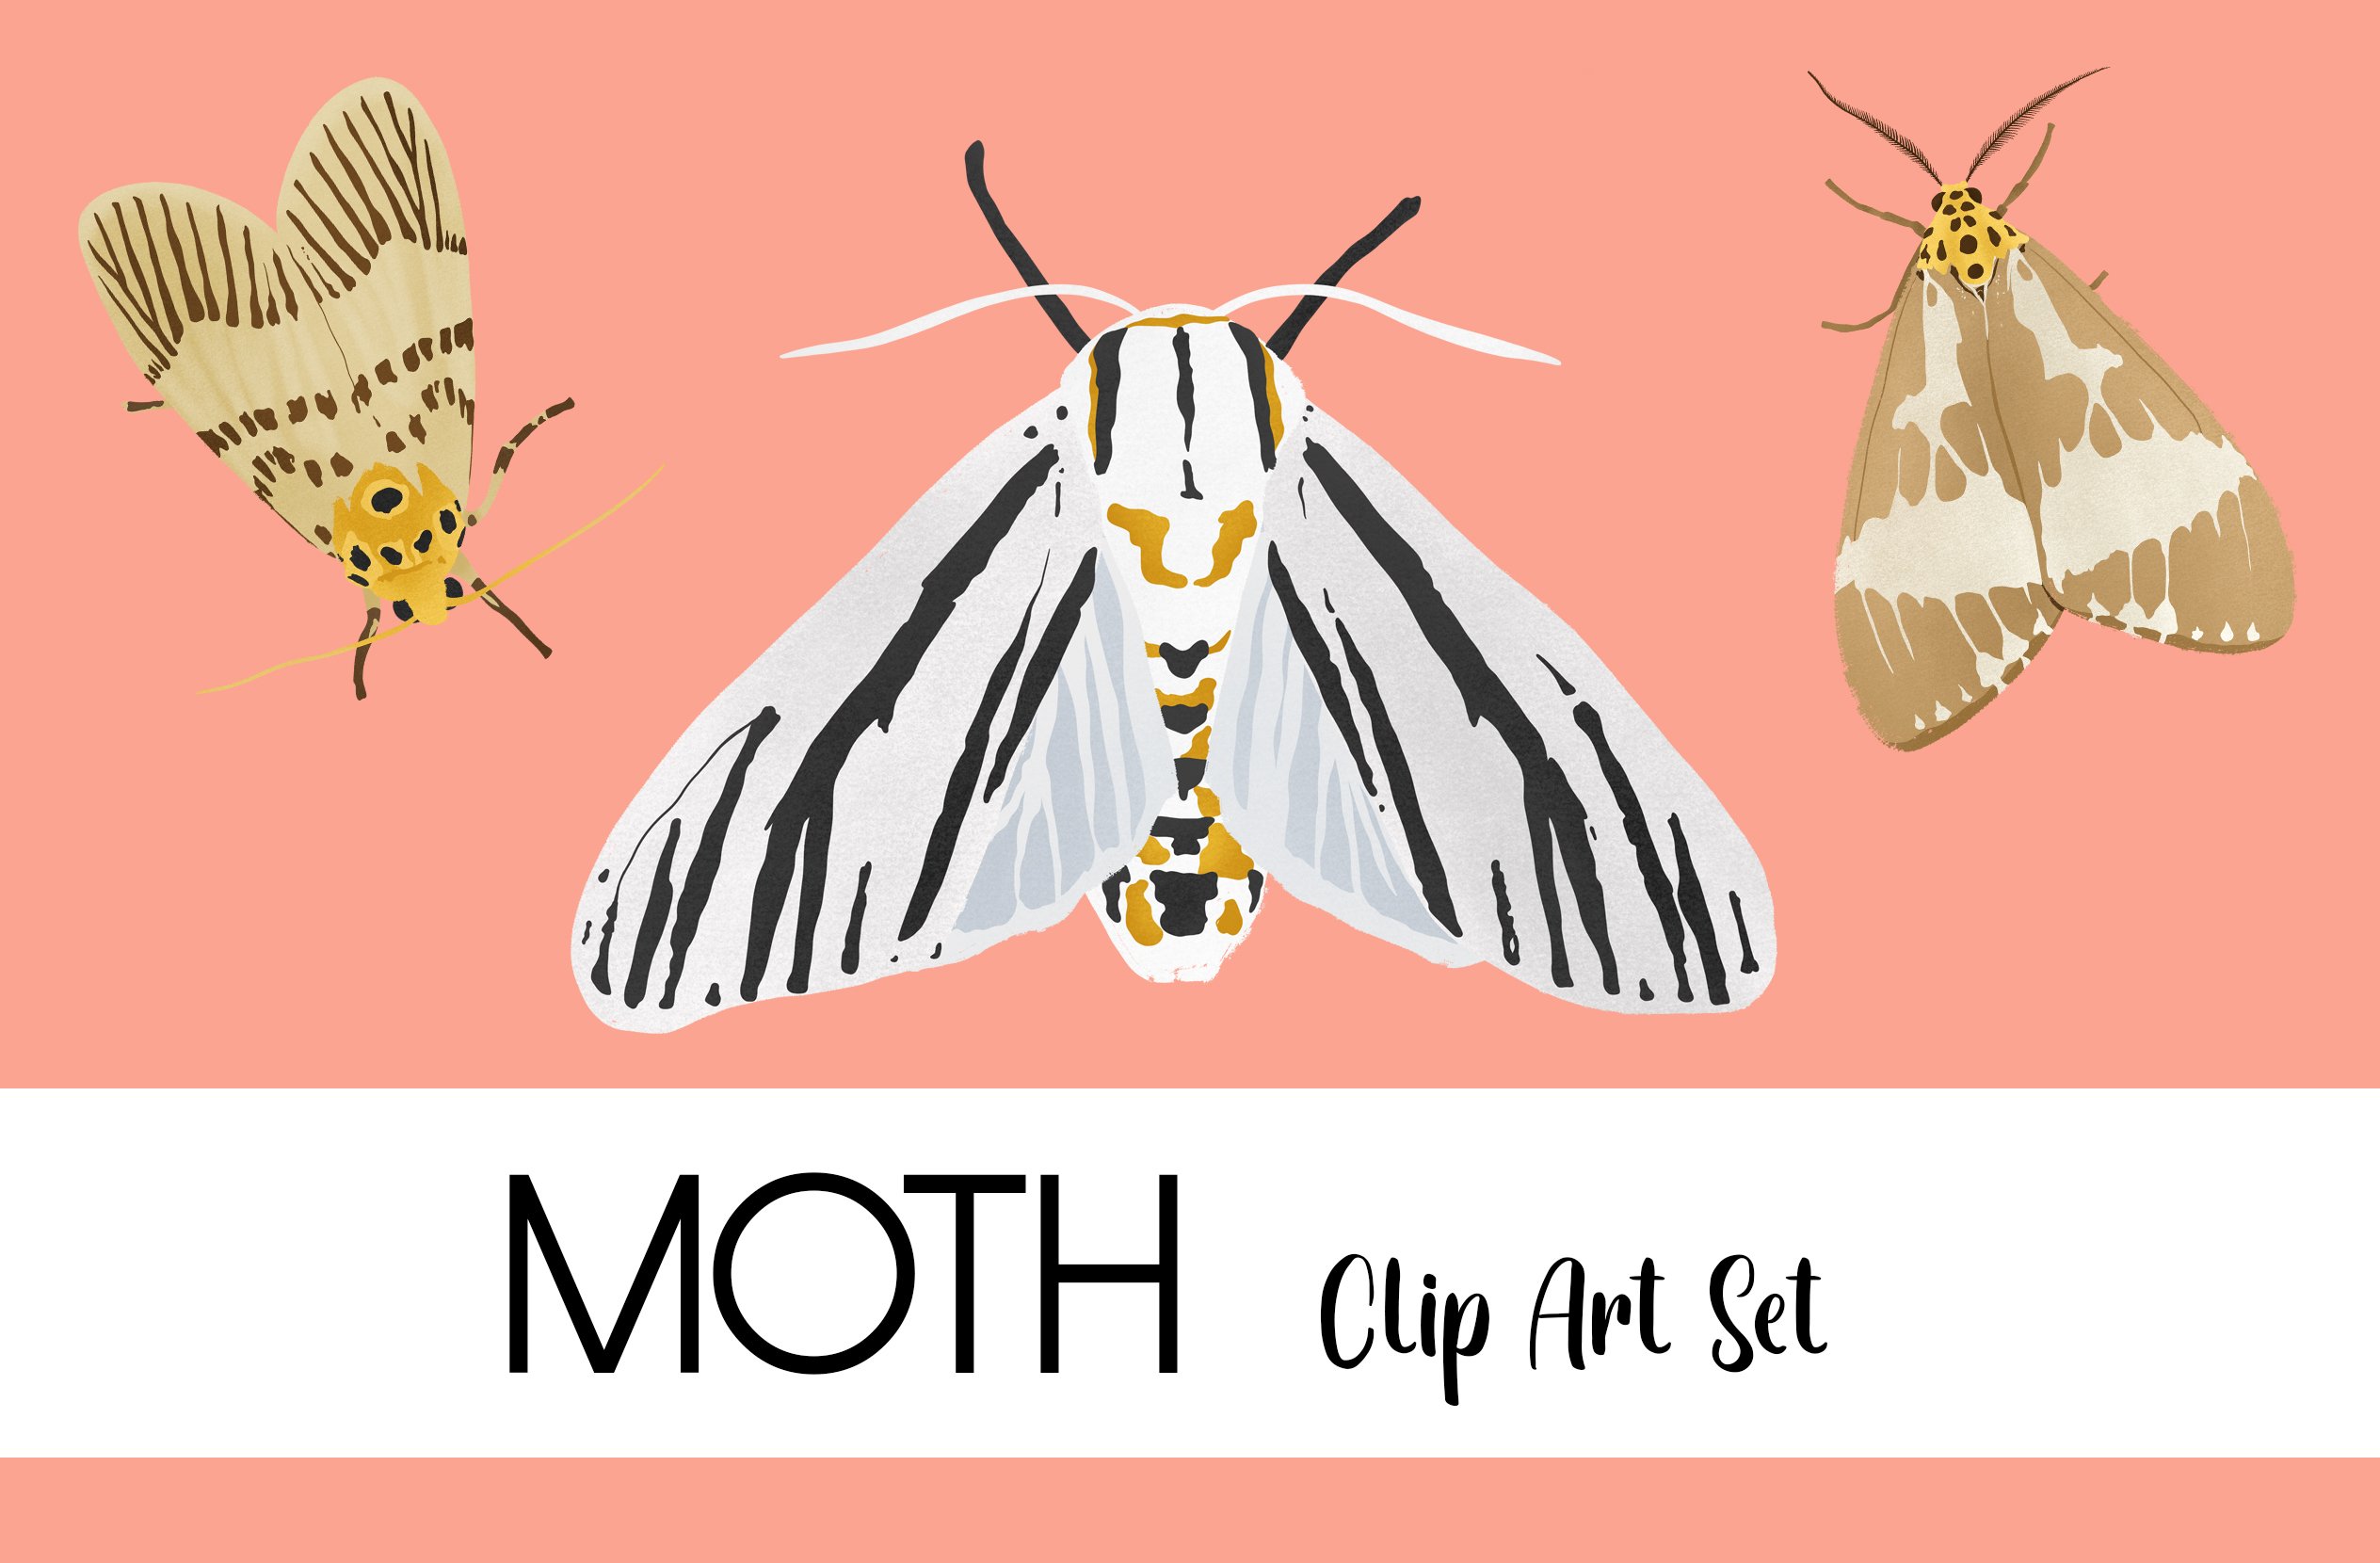 Moth Clip Art Set cover image.